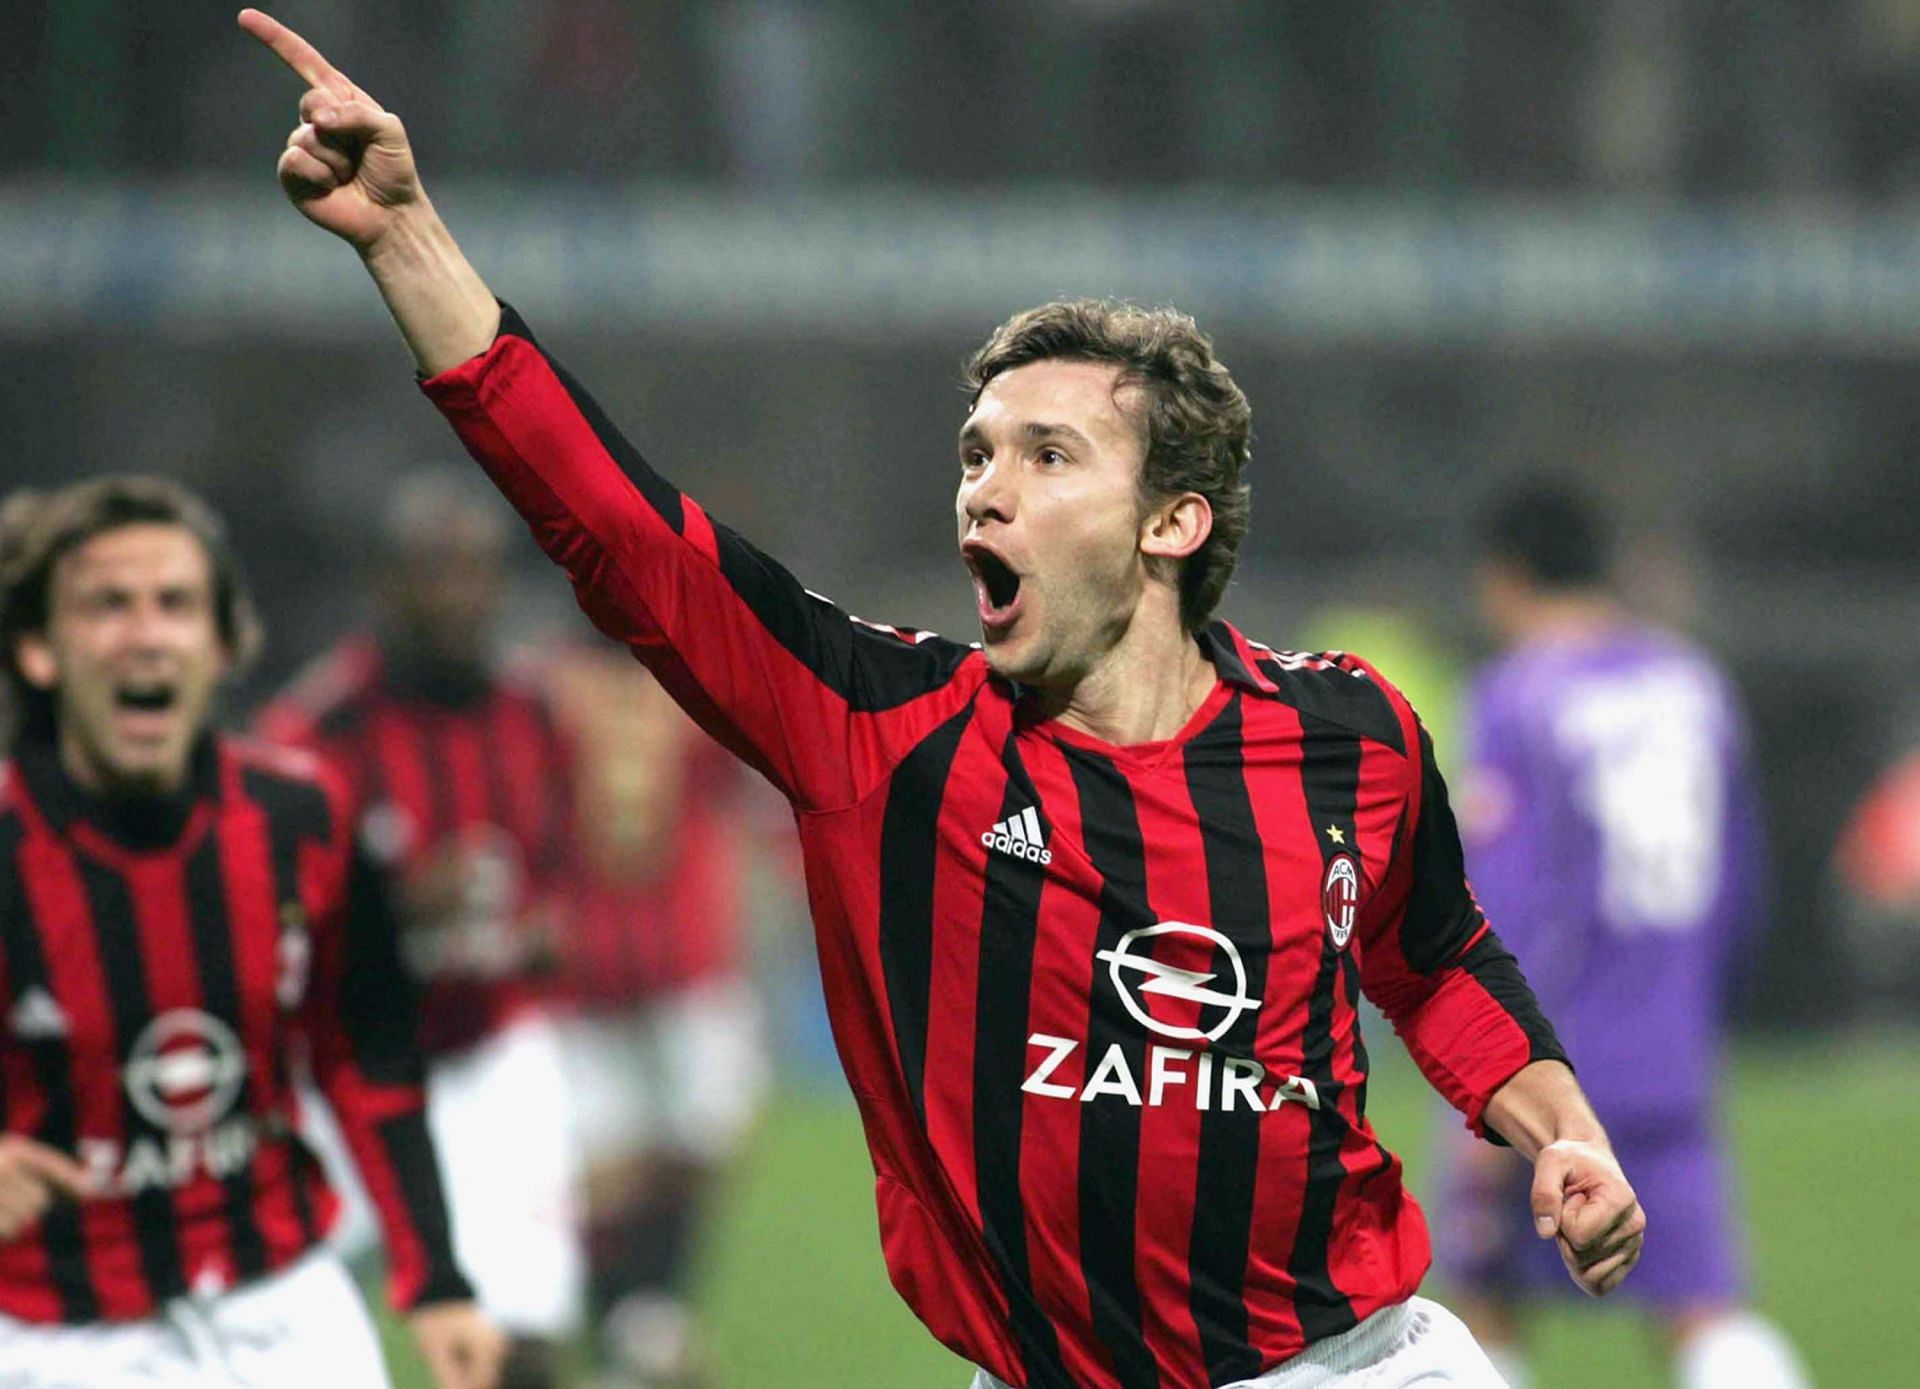 The peerless Ukrainian often delivered in derby games for Milan